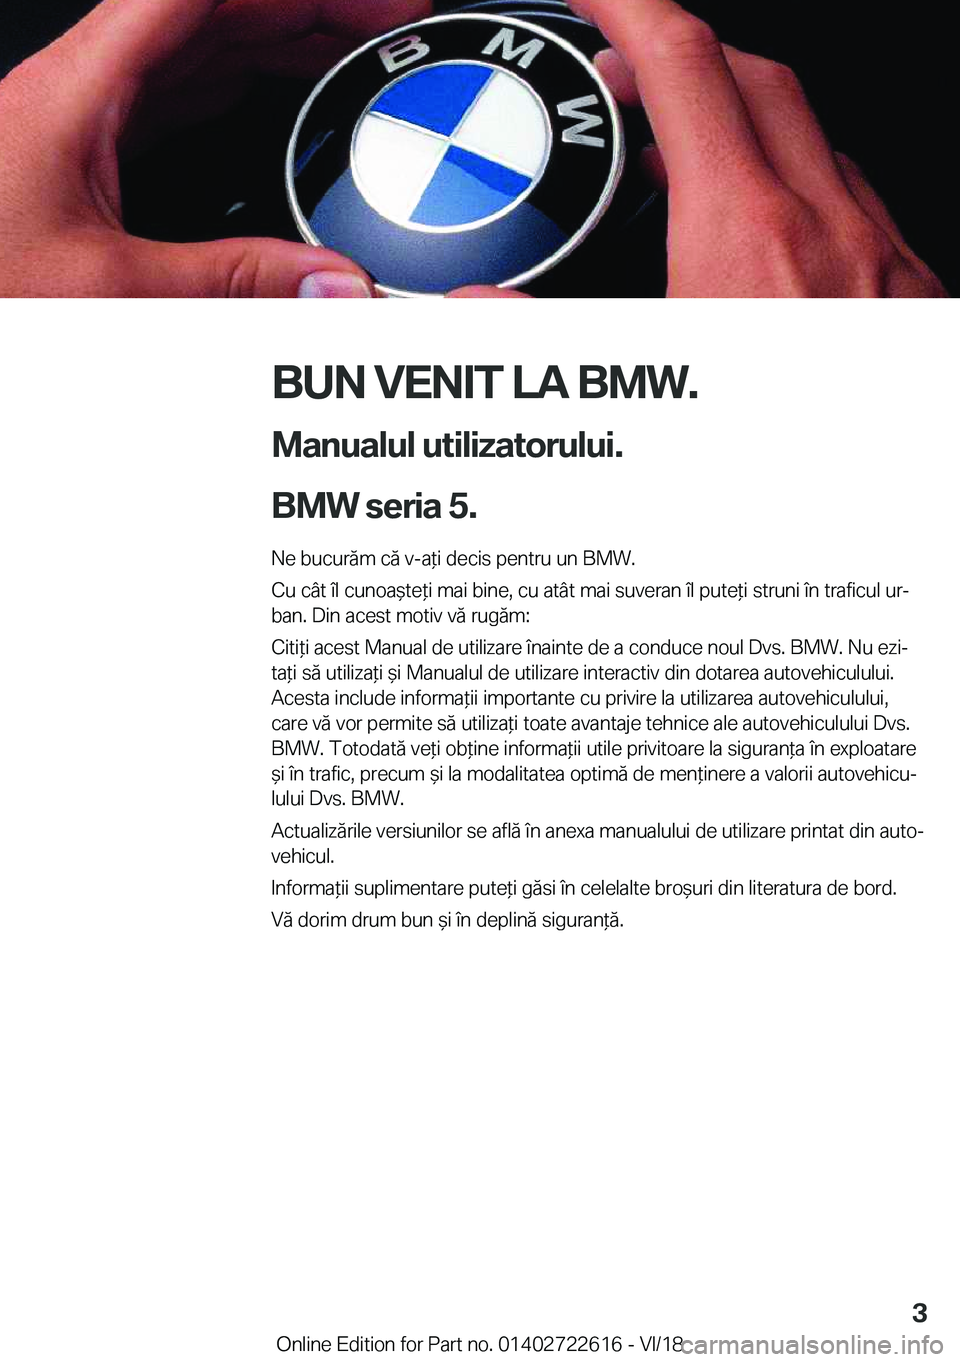 BMW 5 SERIES 2019  Ghiduri De Utilizare (in Romanian) �B�U�N��V�E�N�I�T��L�A��B�M�W�.�M�a�n�u�a�l�u�l��u�t�i�l�i�z�a�t�o�r�u�l�u�i�.
�B�M�W��s�e�r�i�a��5�.
�N�e��b�u�c�u�r�